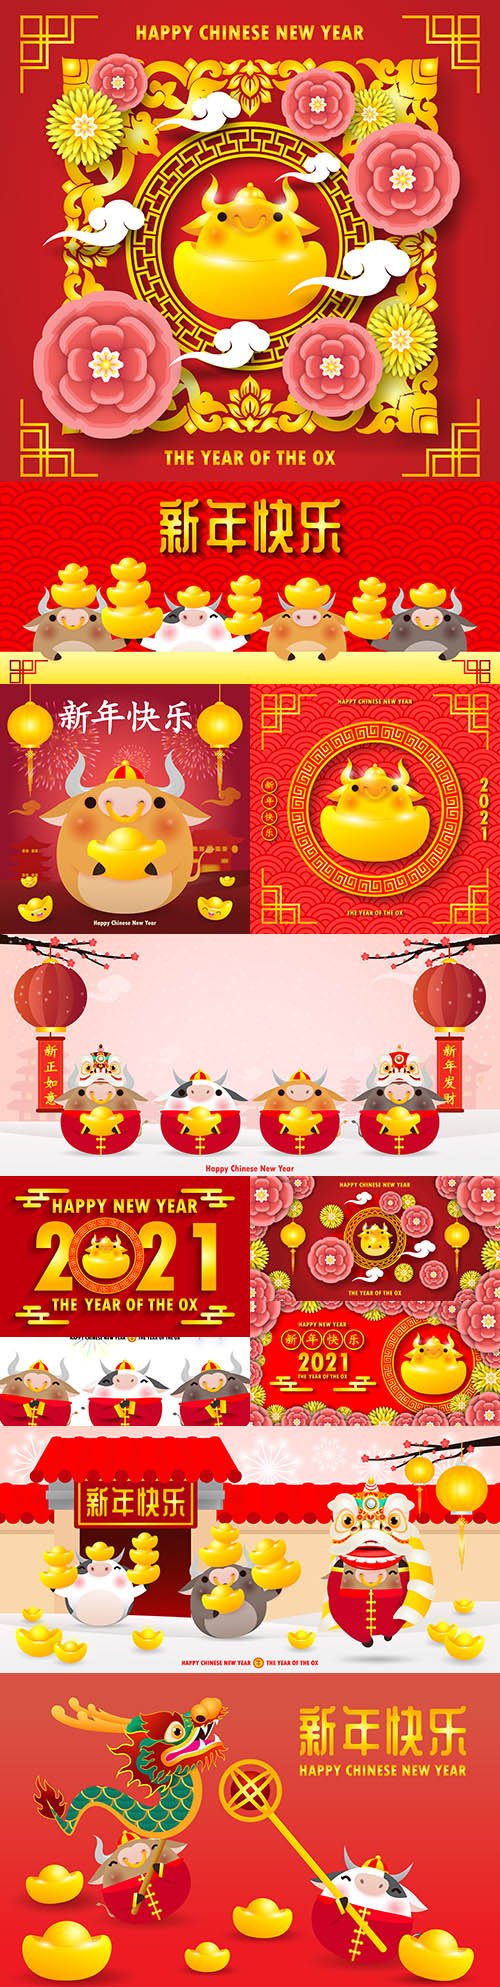 Happy Chinese New Year 2021 design zodiac bull poster